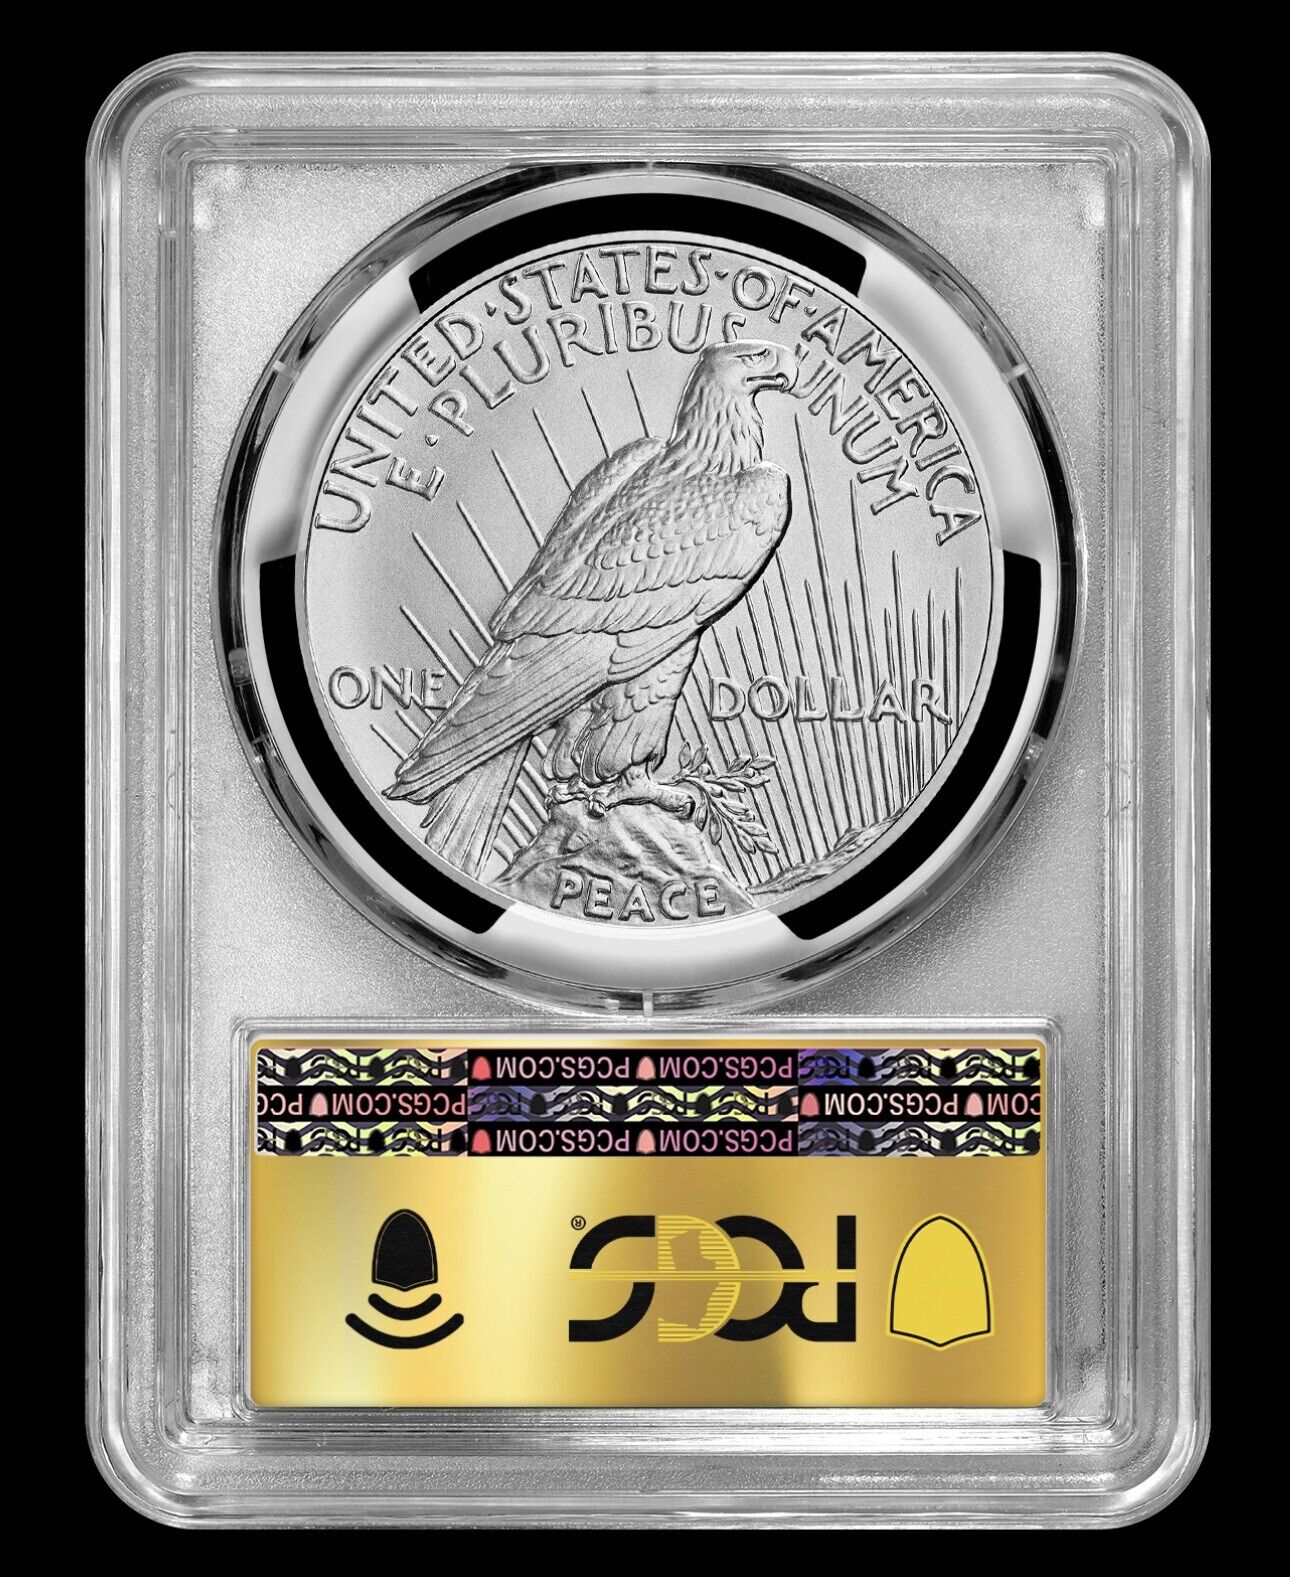 2023 Peace Dollar $1 (MS70) PCGS Advanced Release AR - Gold Foil Label